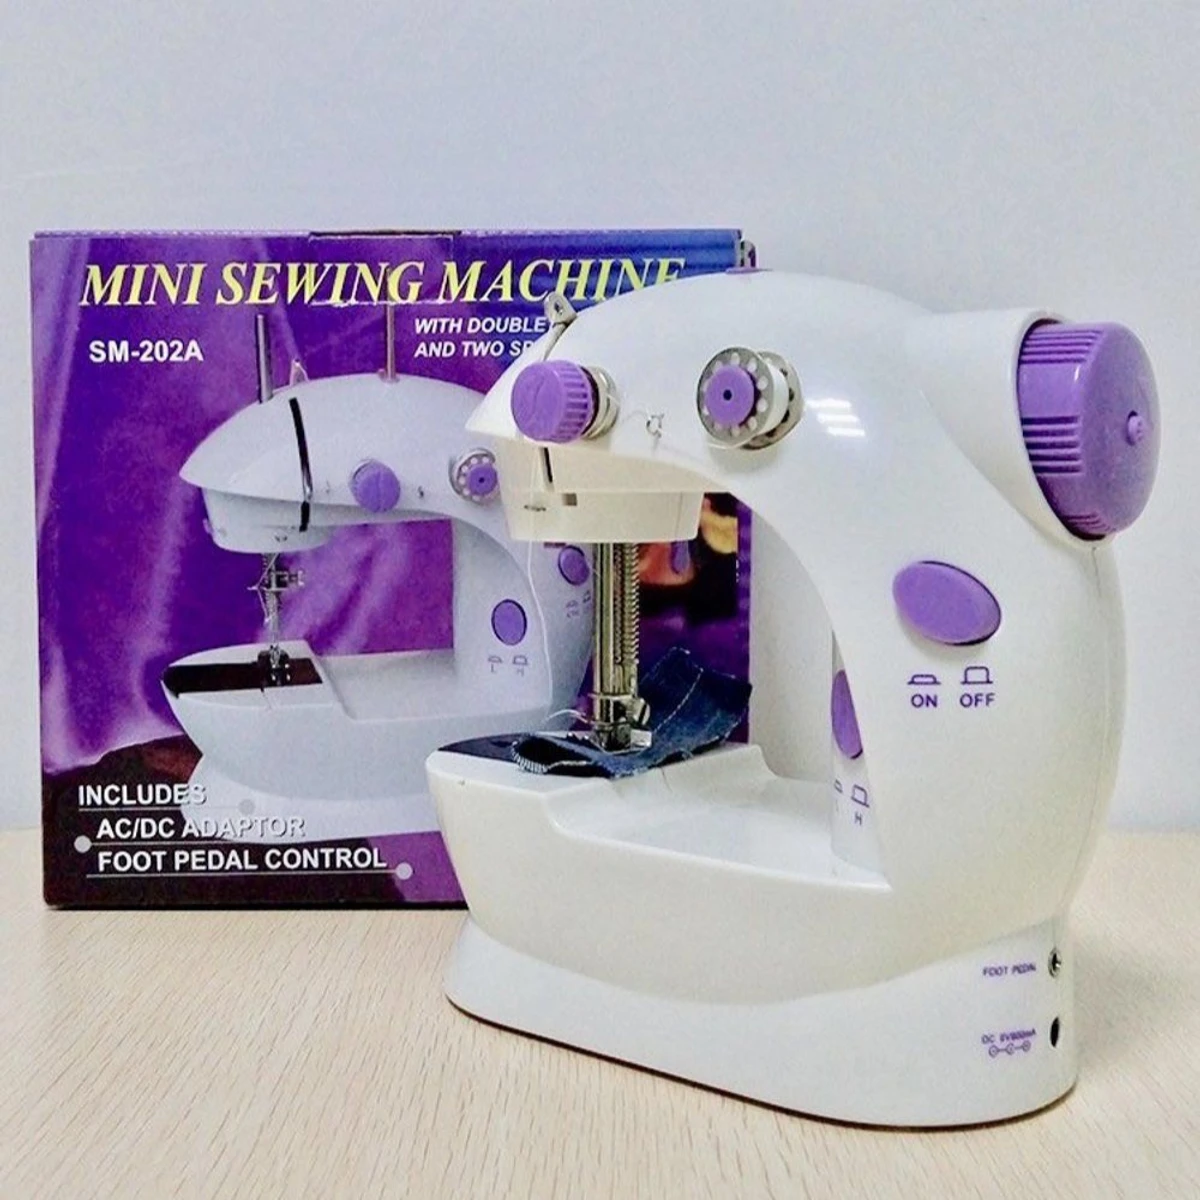 MINI SEWING MACHINE